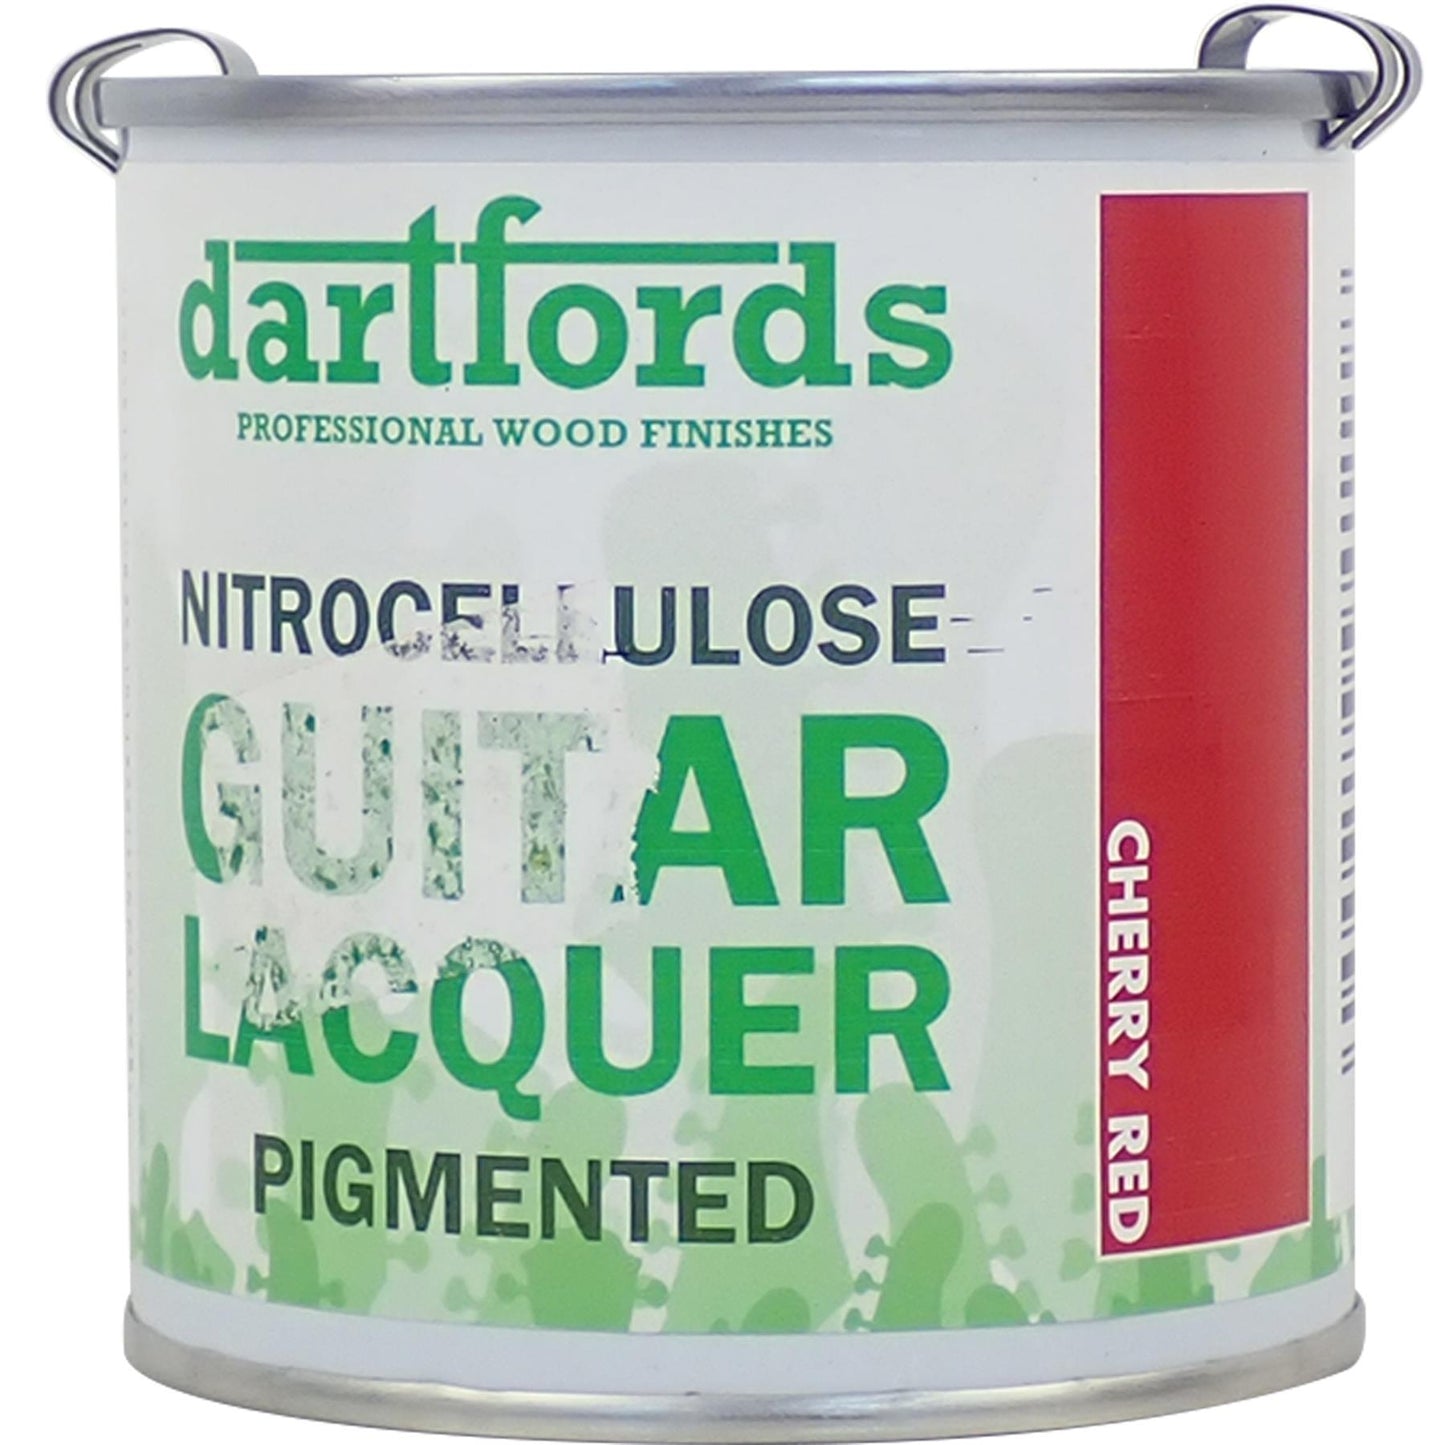 dartfords Cherry Red Pigmented Nitrocellulose Guitar Lacquer - 230ml Tin